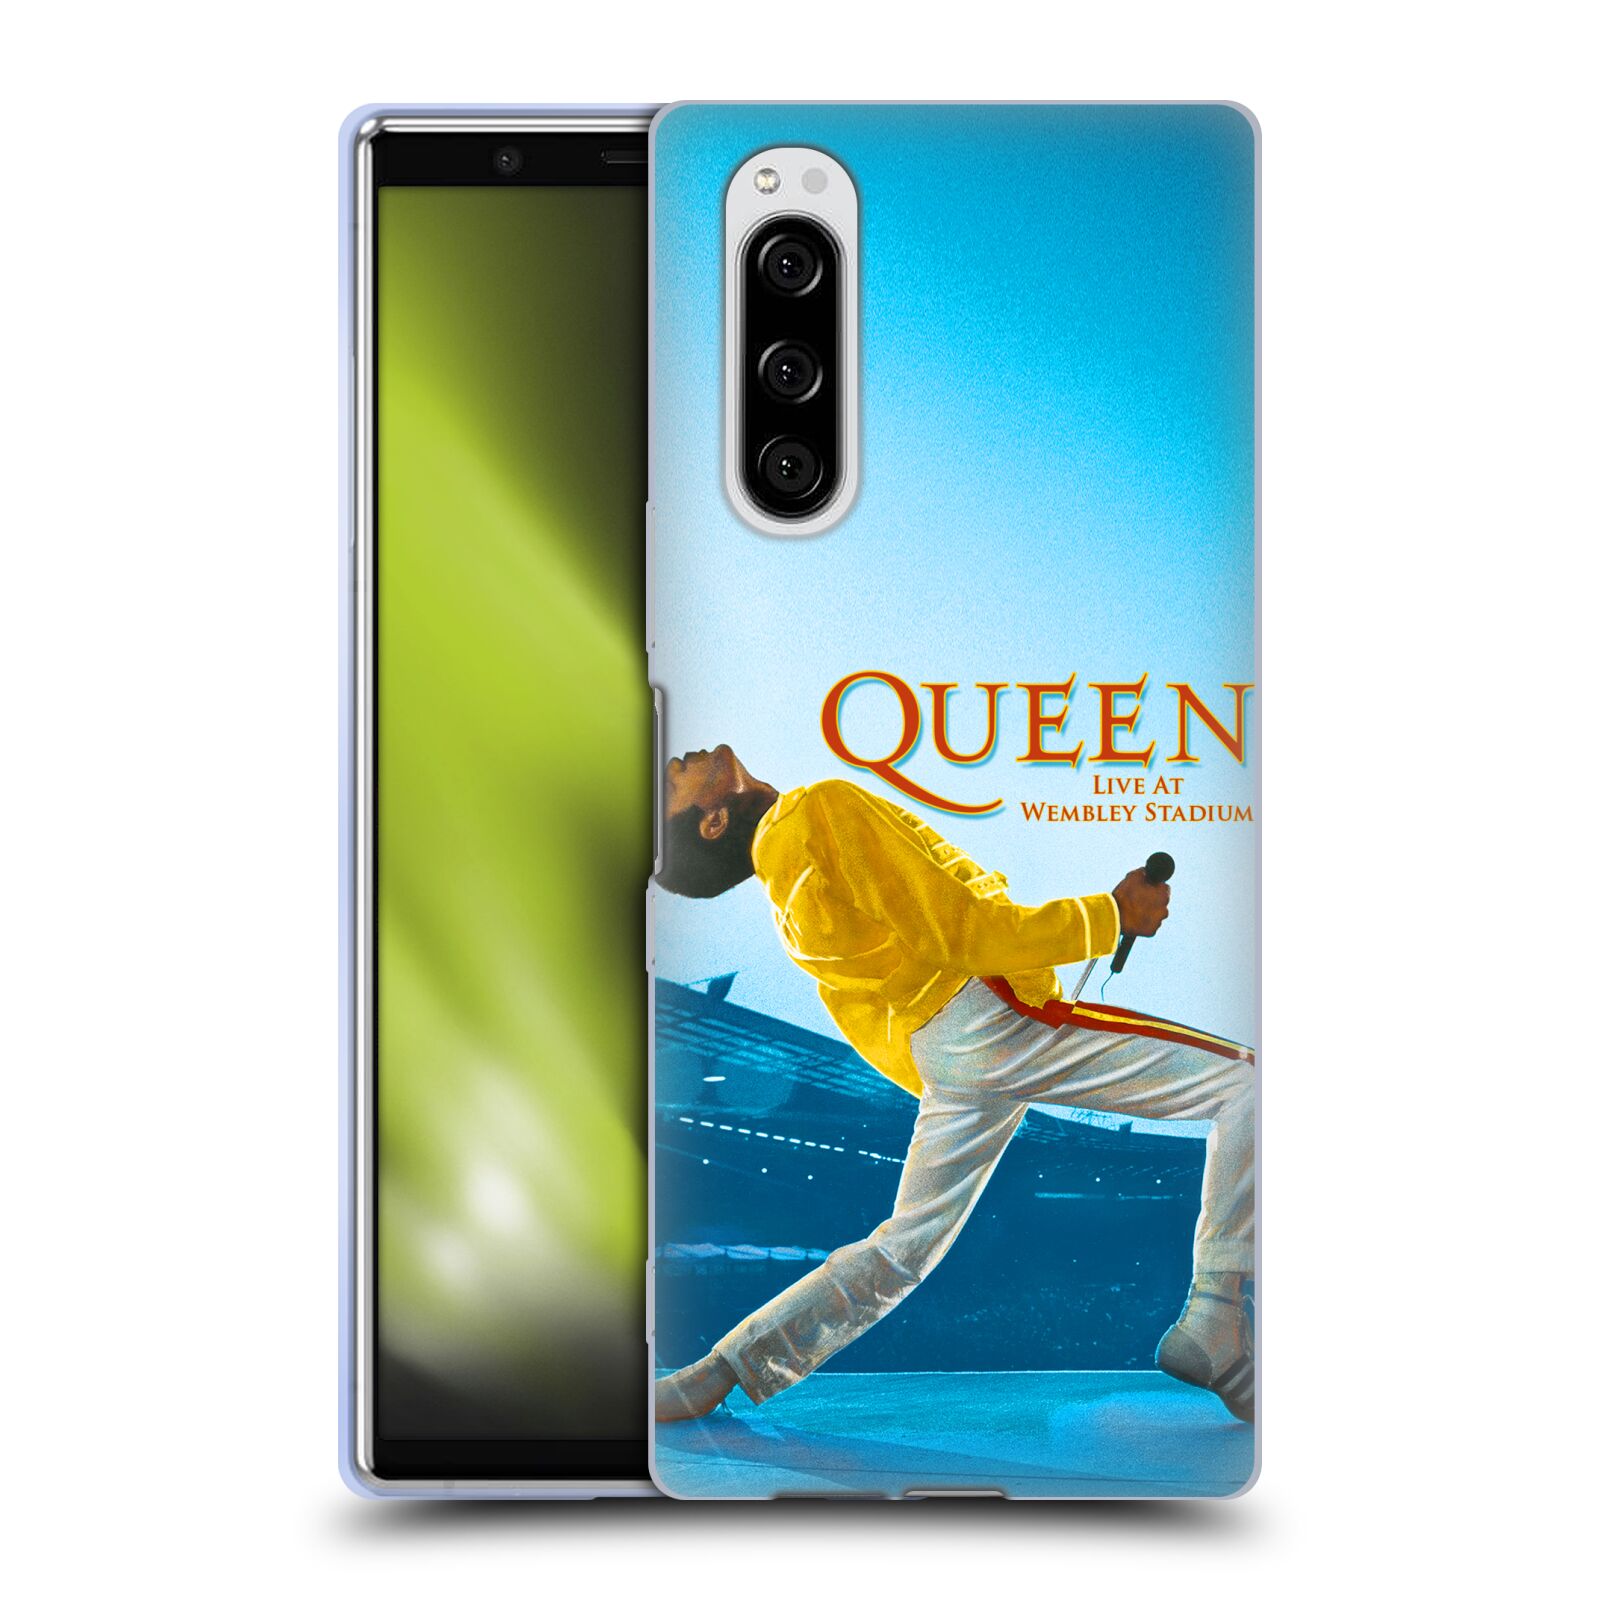 Silikonové pouzdro na mobil Sony Xperia 5 - Head Case - Queen - Freddie Mercury